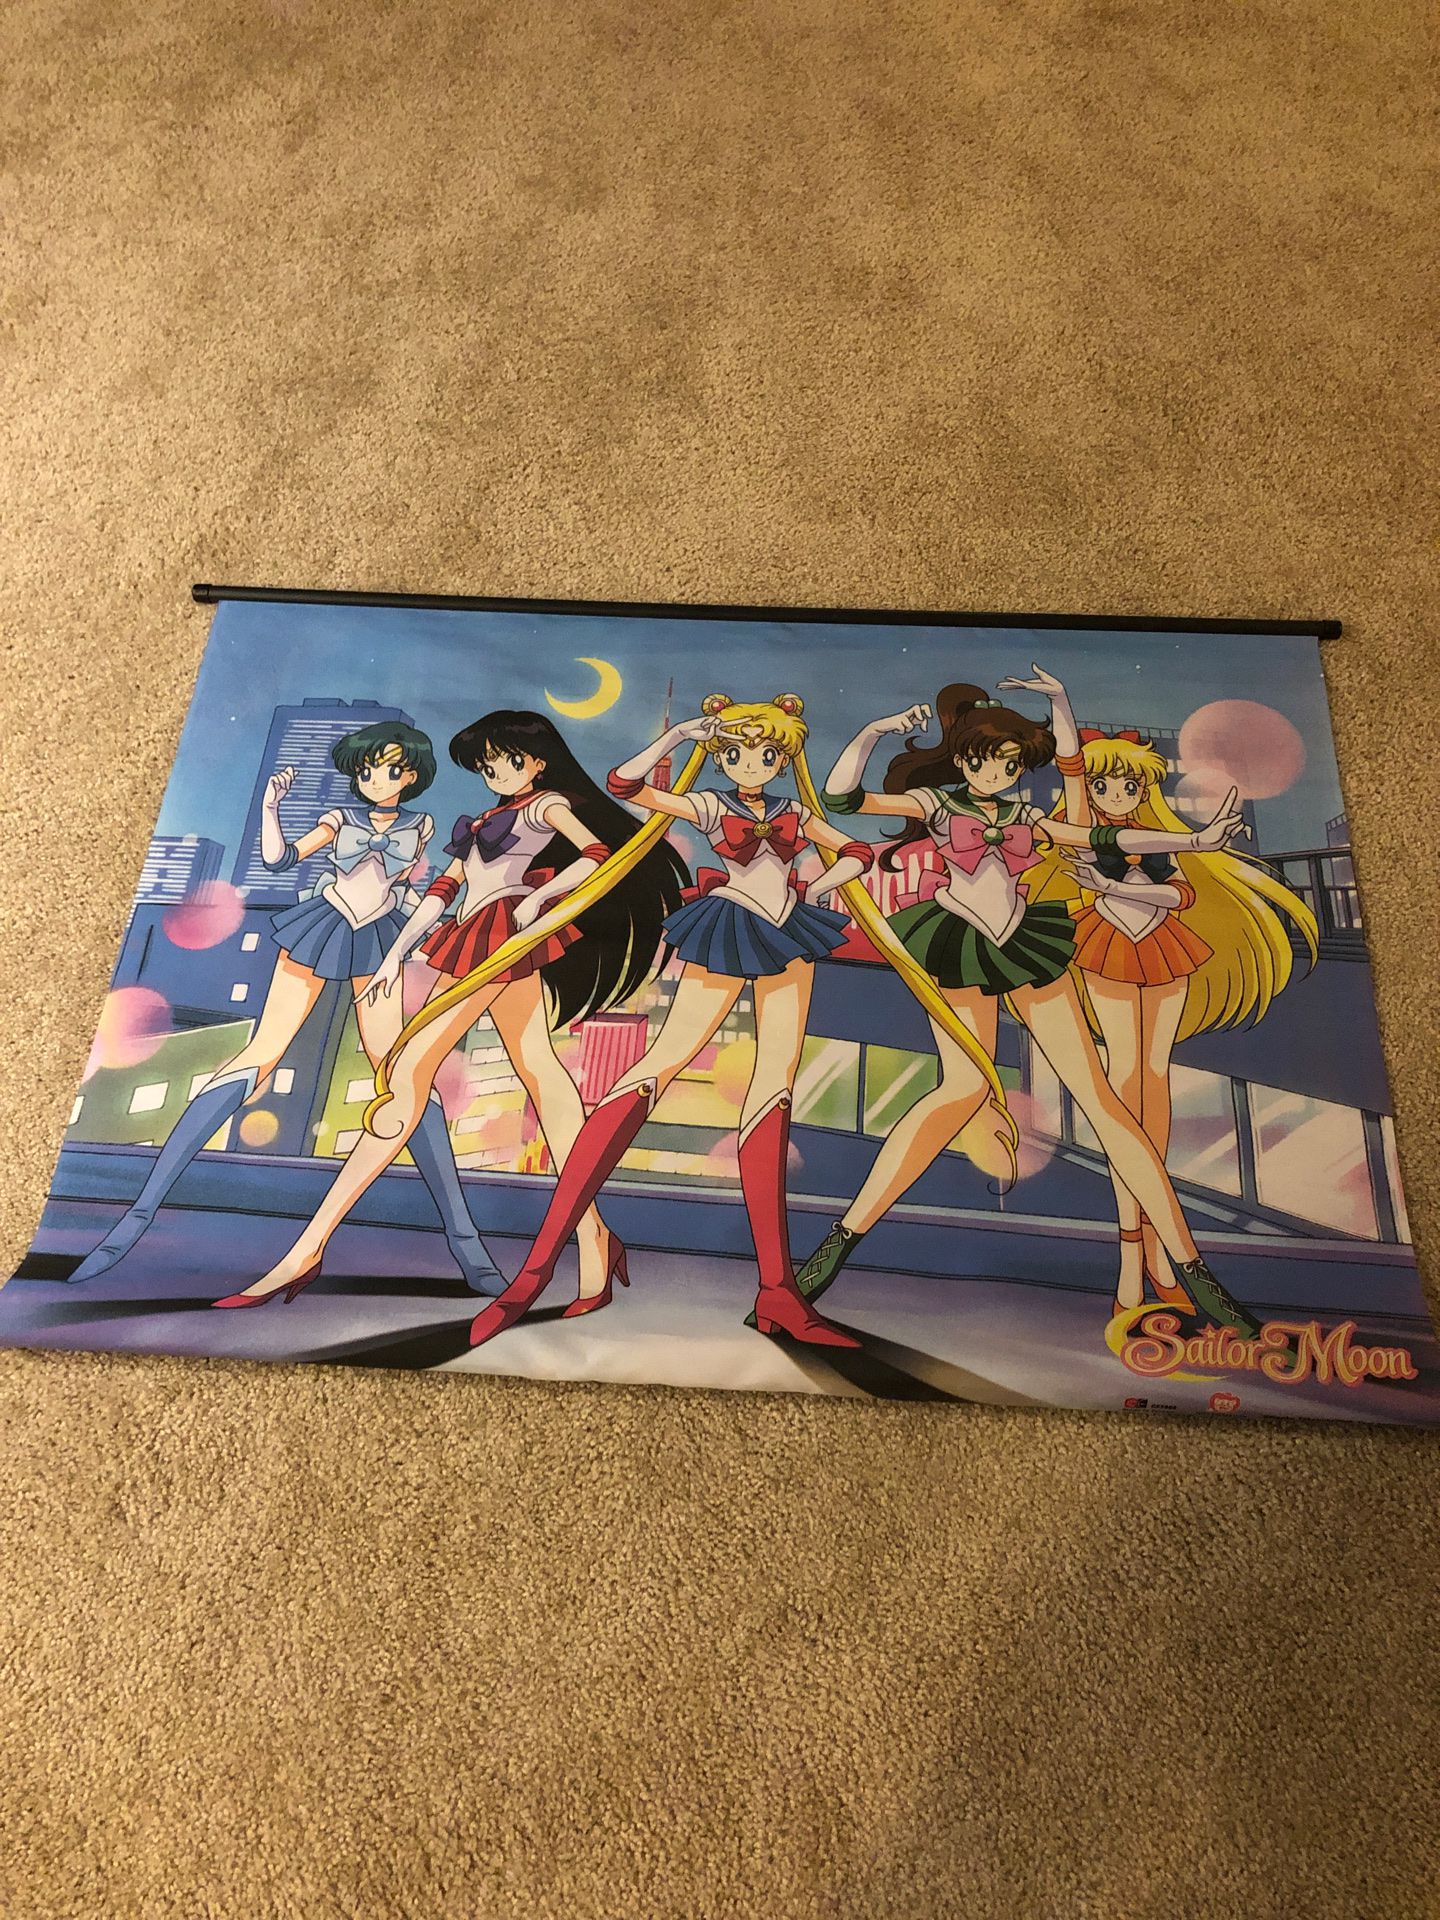 Sailor moon banner